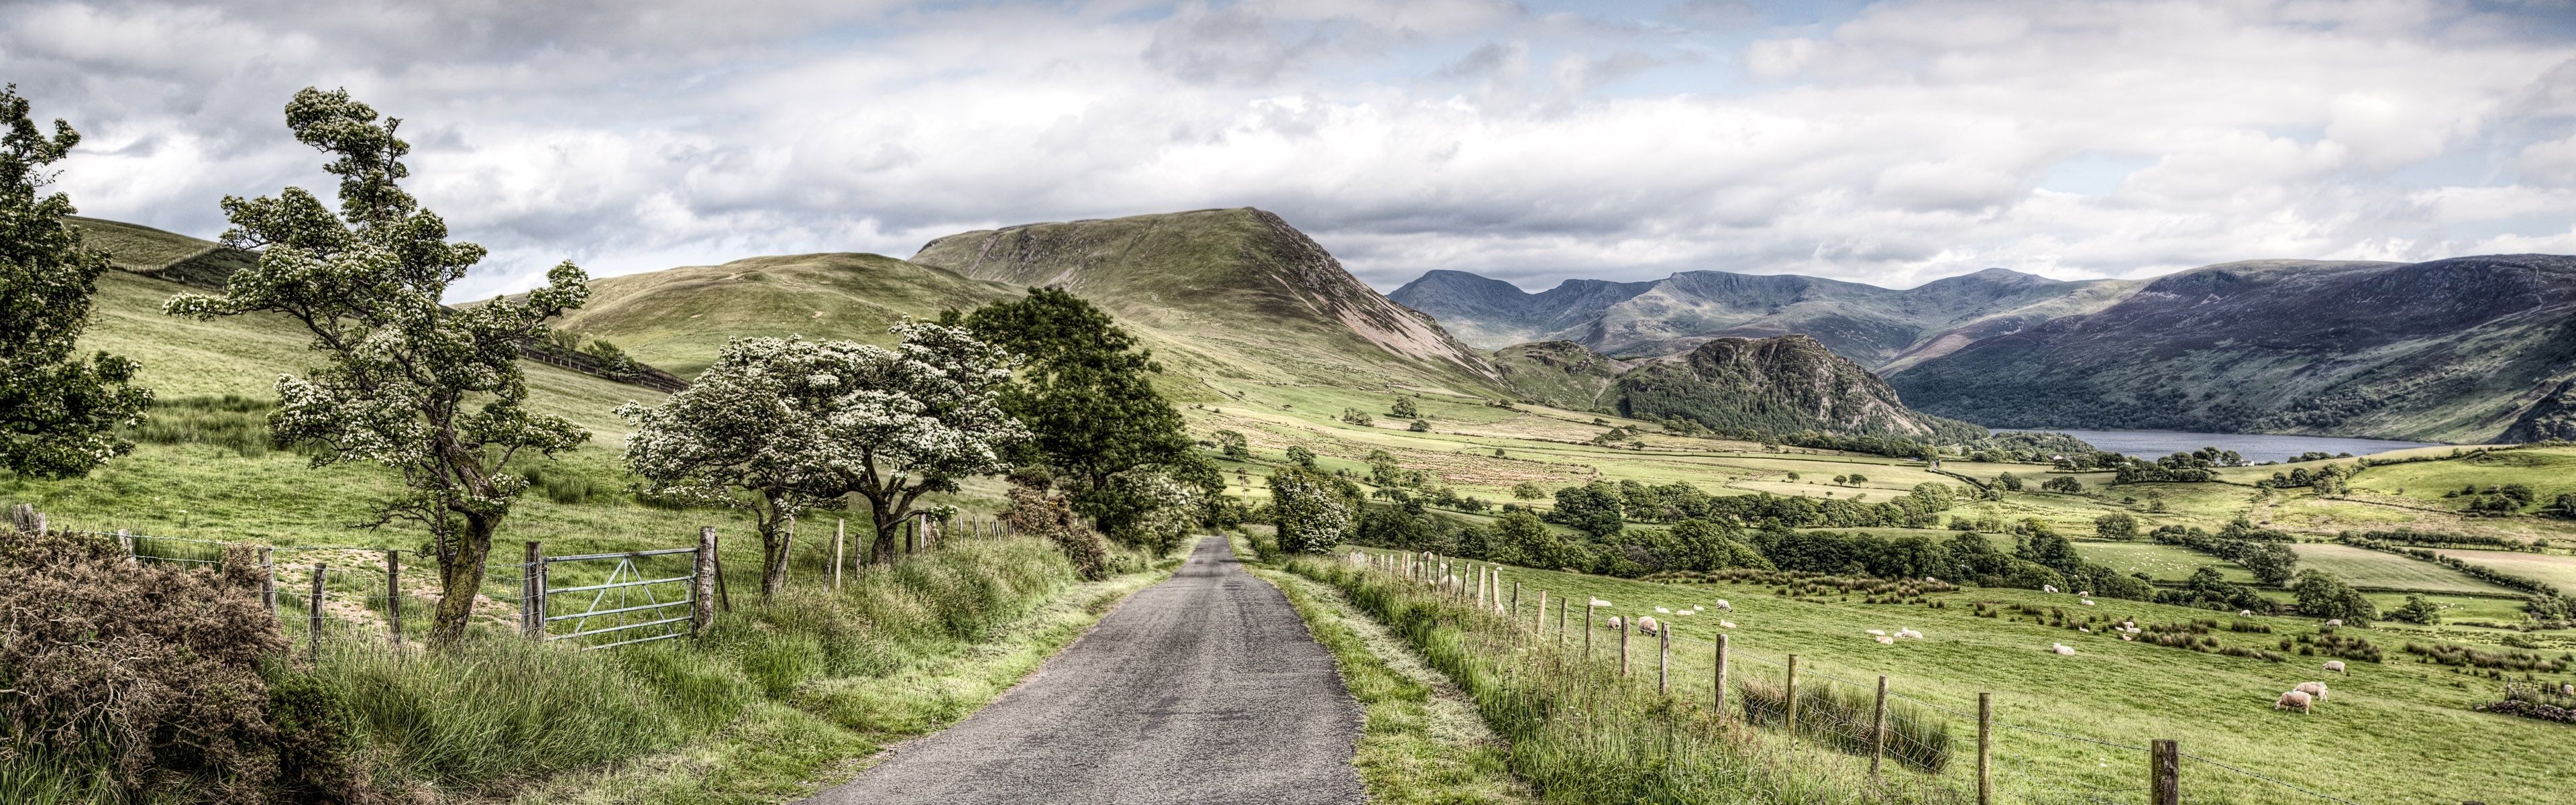 Road, trees, mountains, Lake District National Park, Cumbria, UK